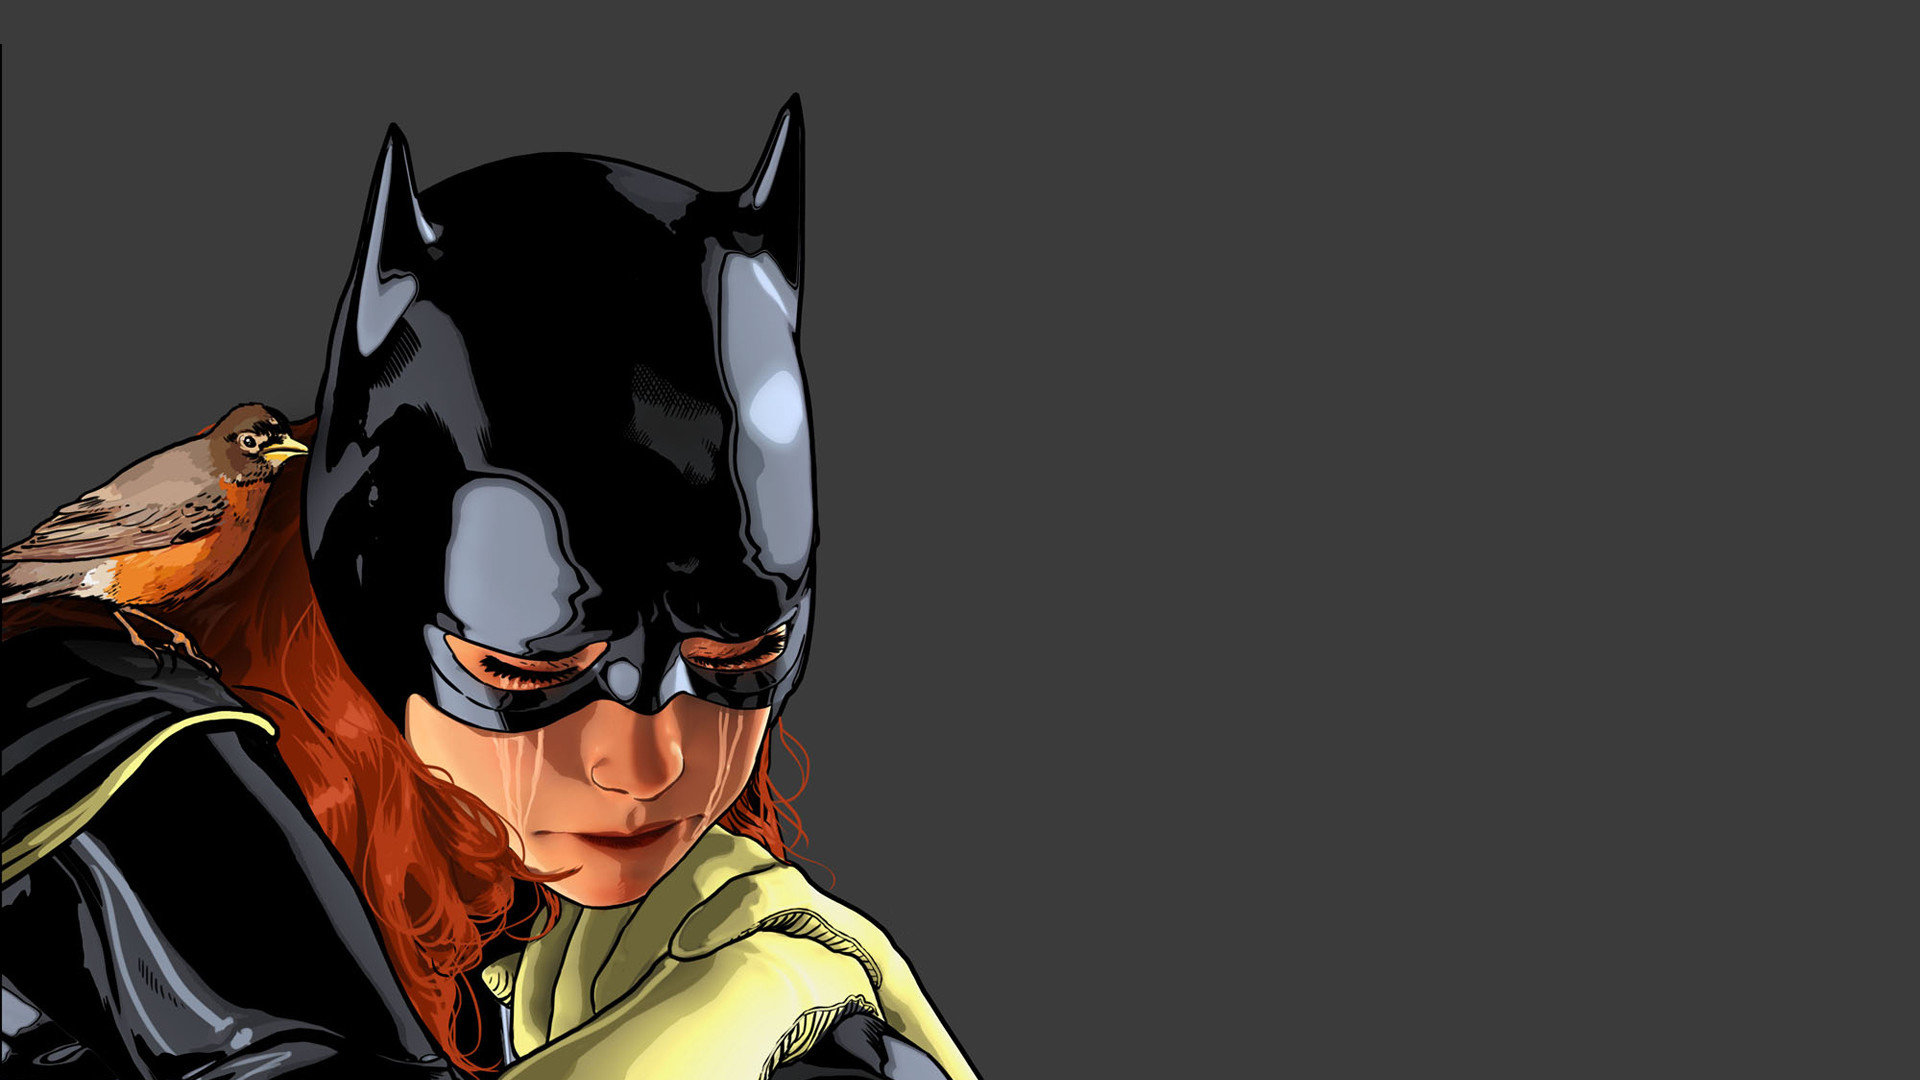 Download hd 1920x1080 Batgirl desktop background ID:235090 for free